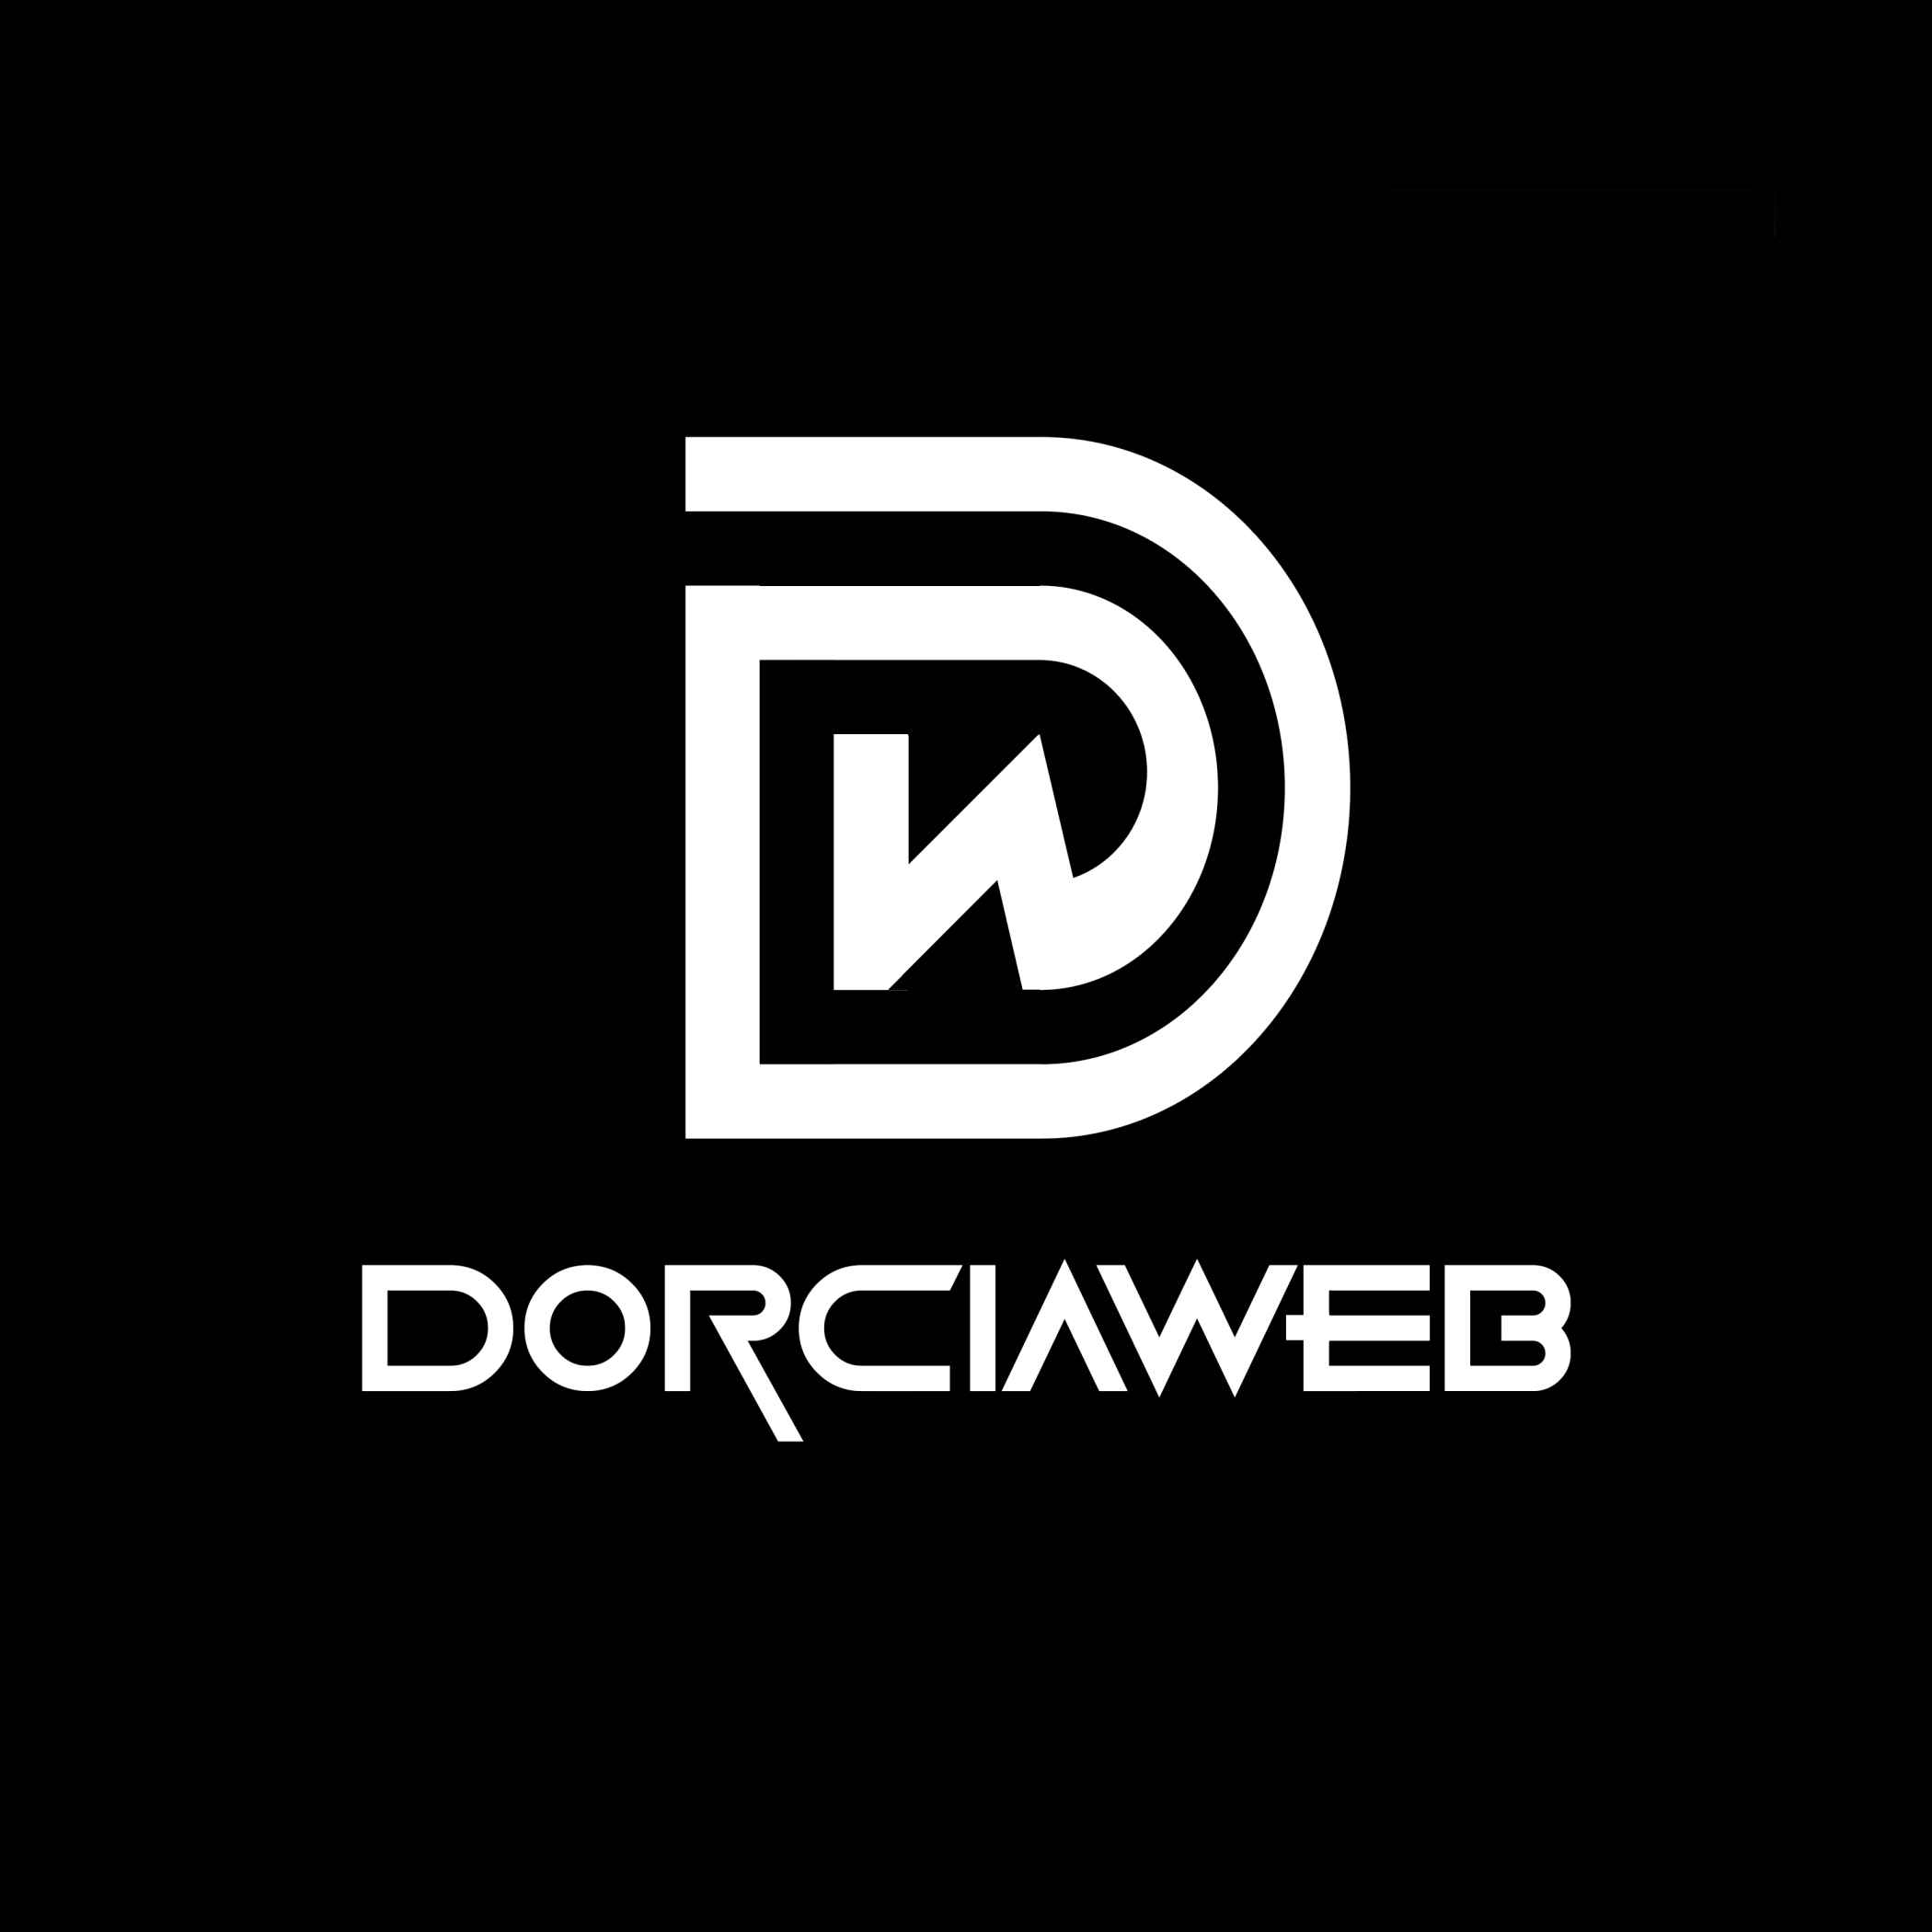 Dorciaweb